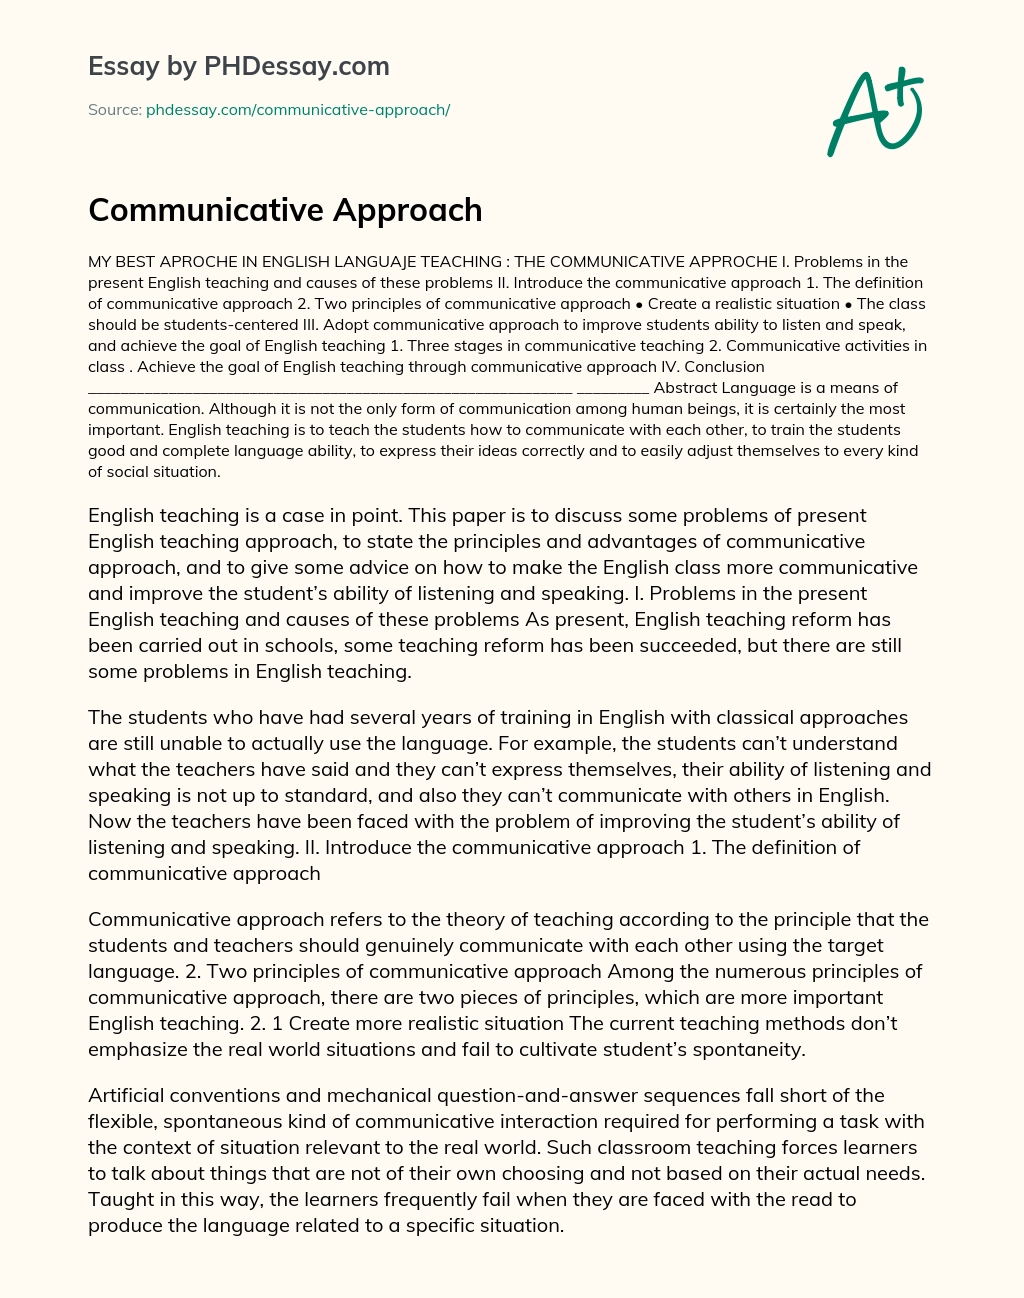 Communicative Approach essay